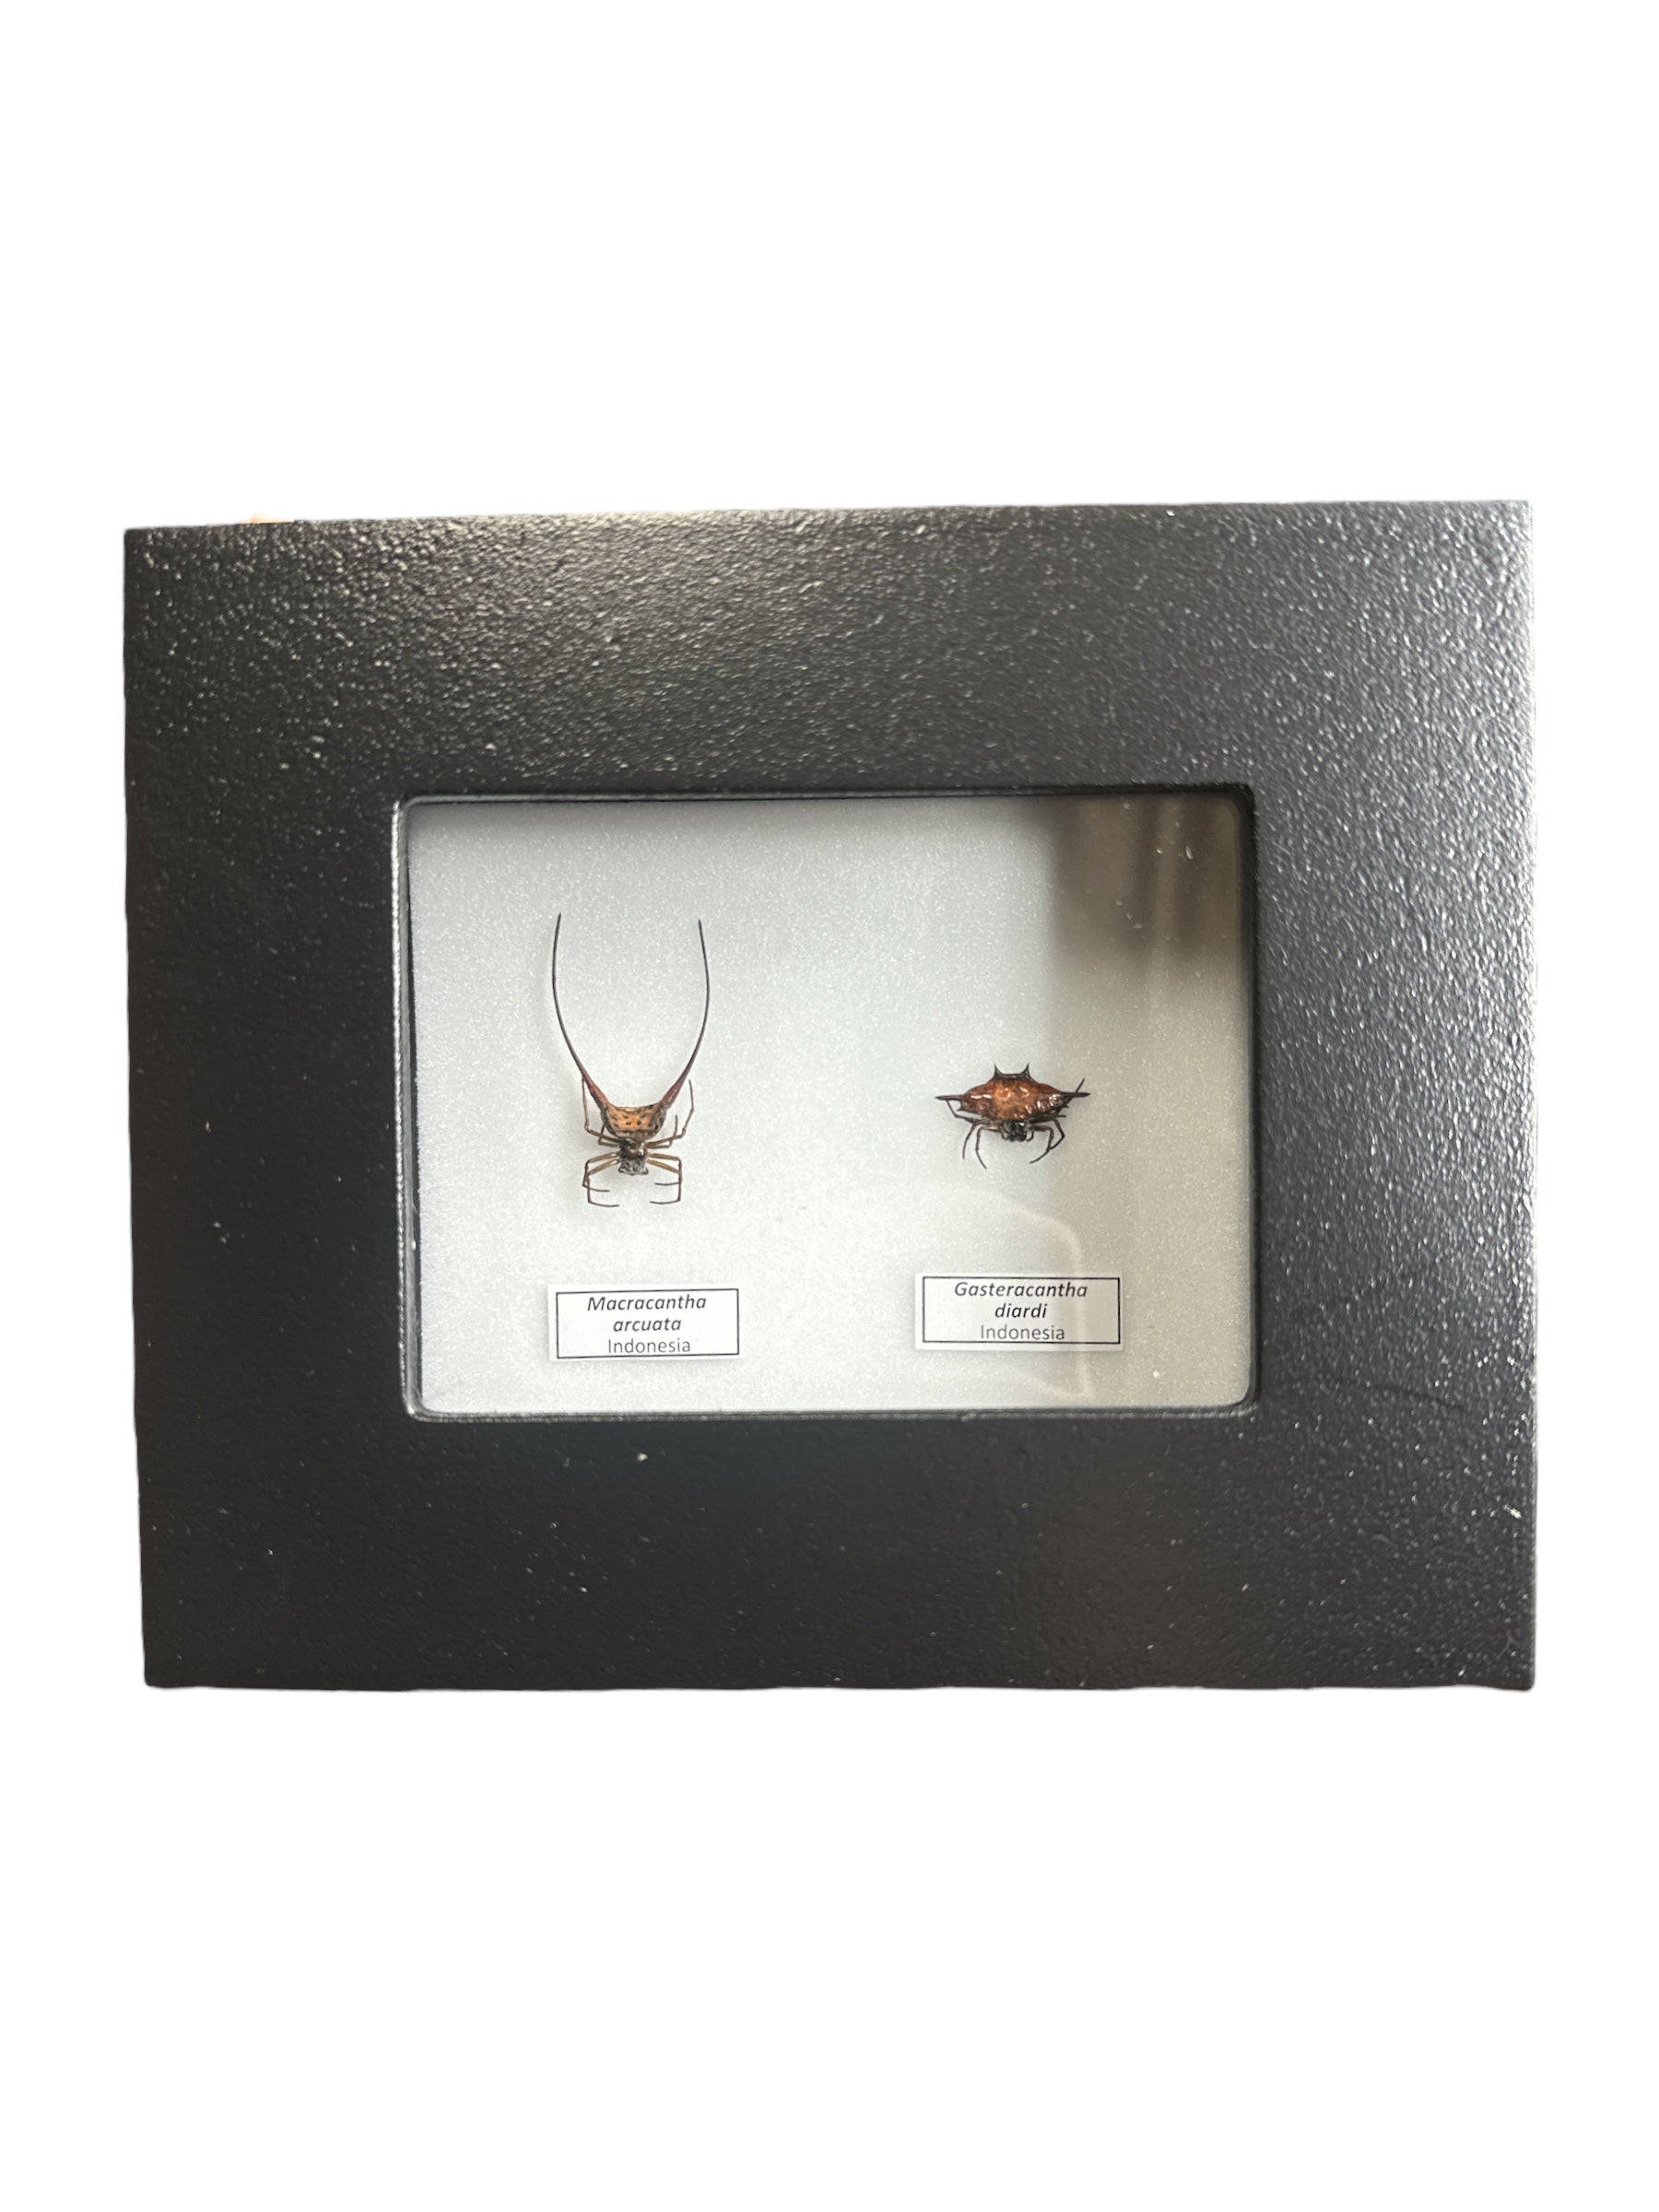 Orb Weaver Spiders (Gastarancantha diardi + Macracantha arcuata) - 2x3" Frame